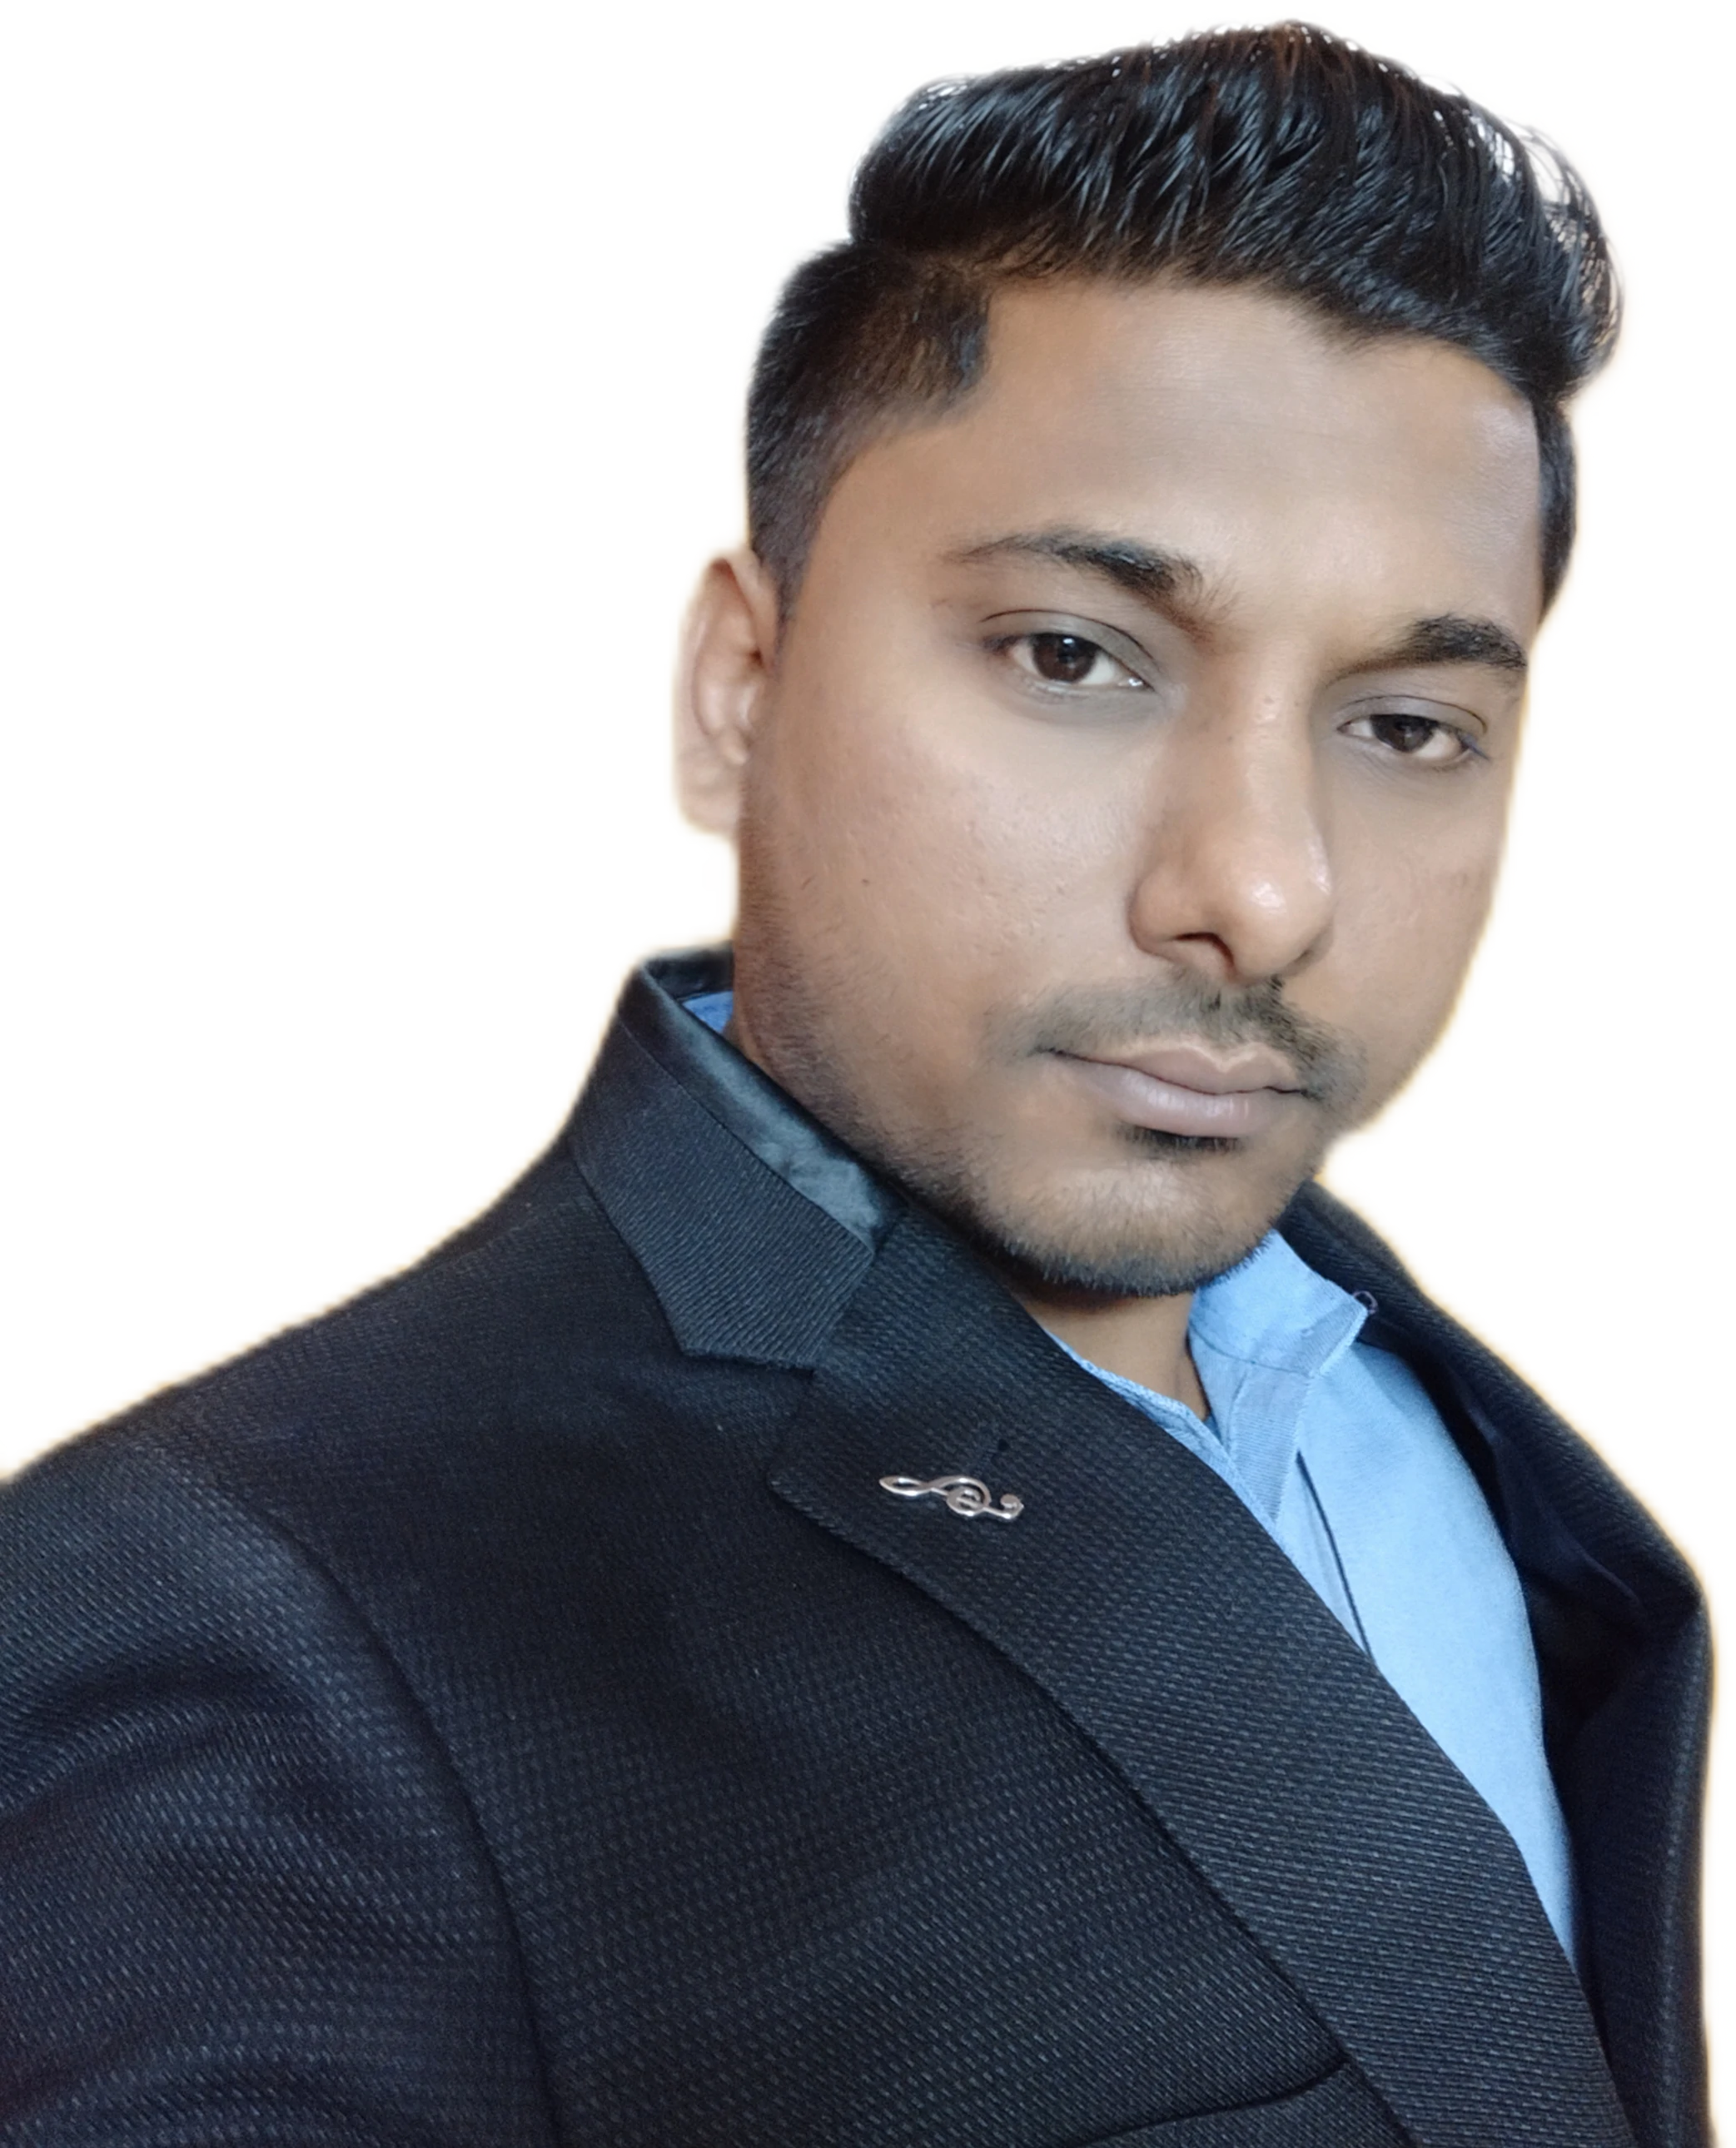 Mr. Jyotin Roy